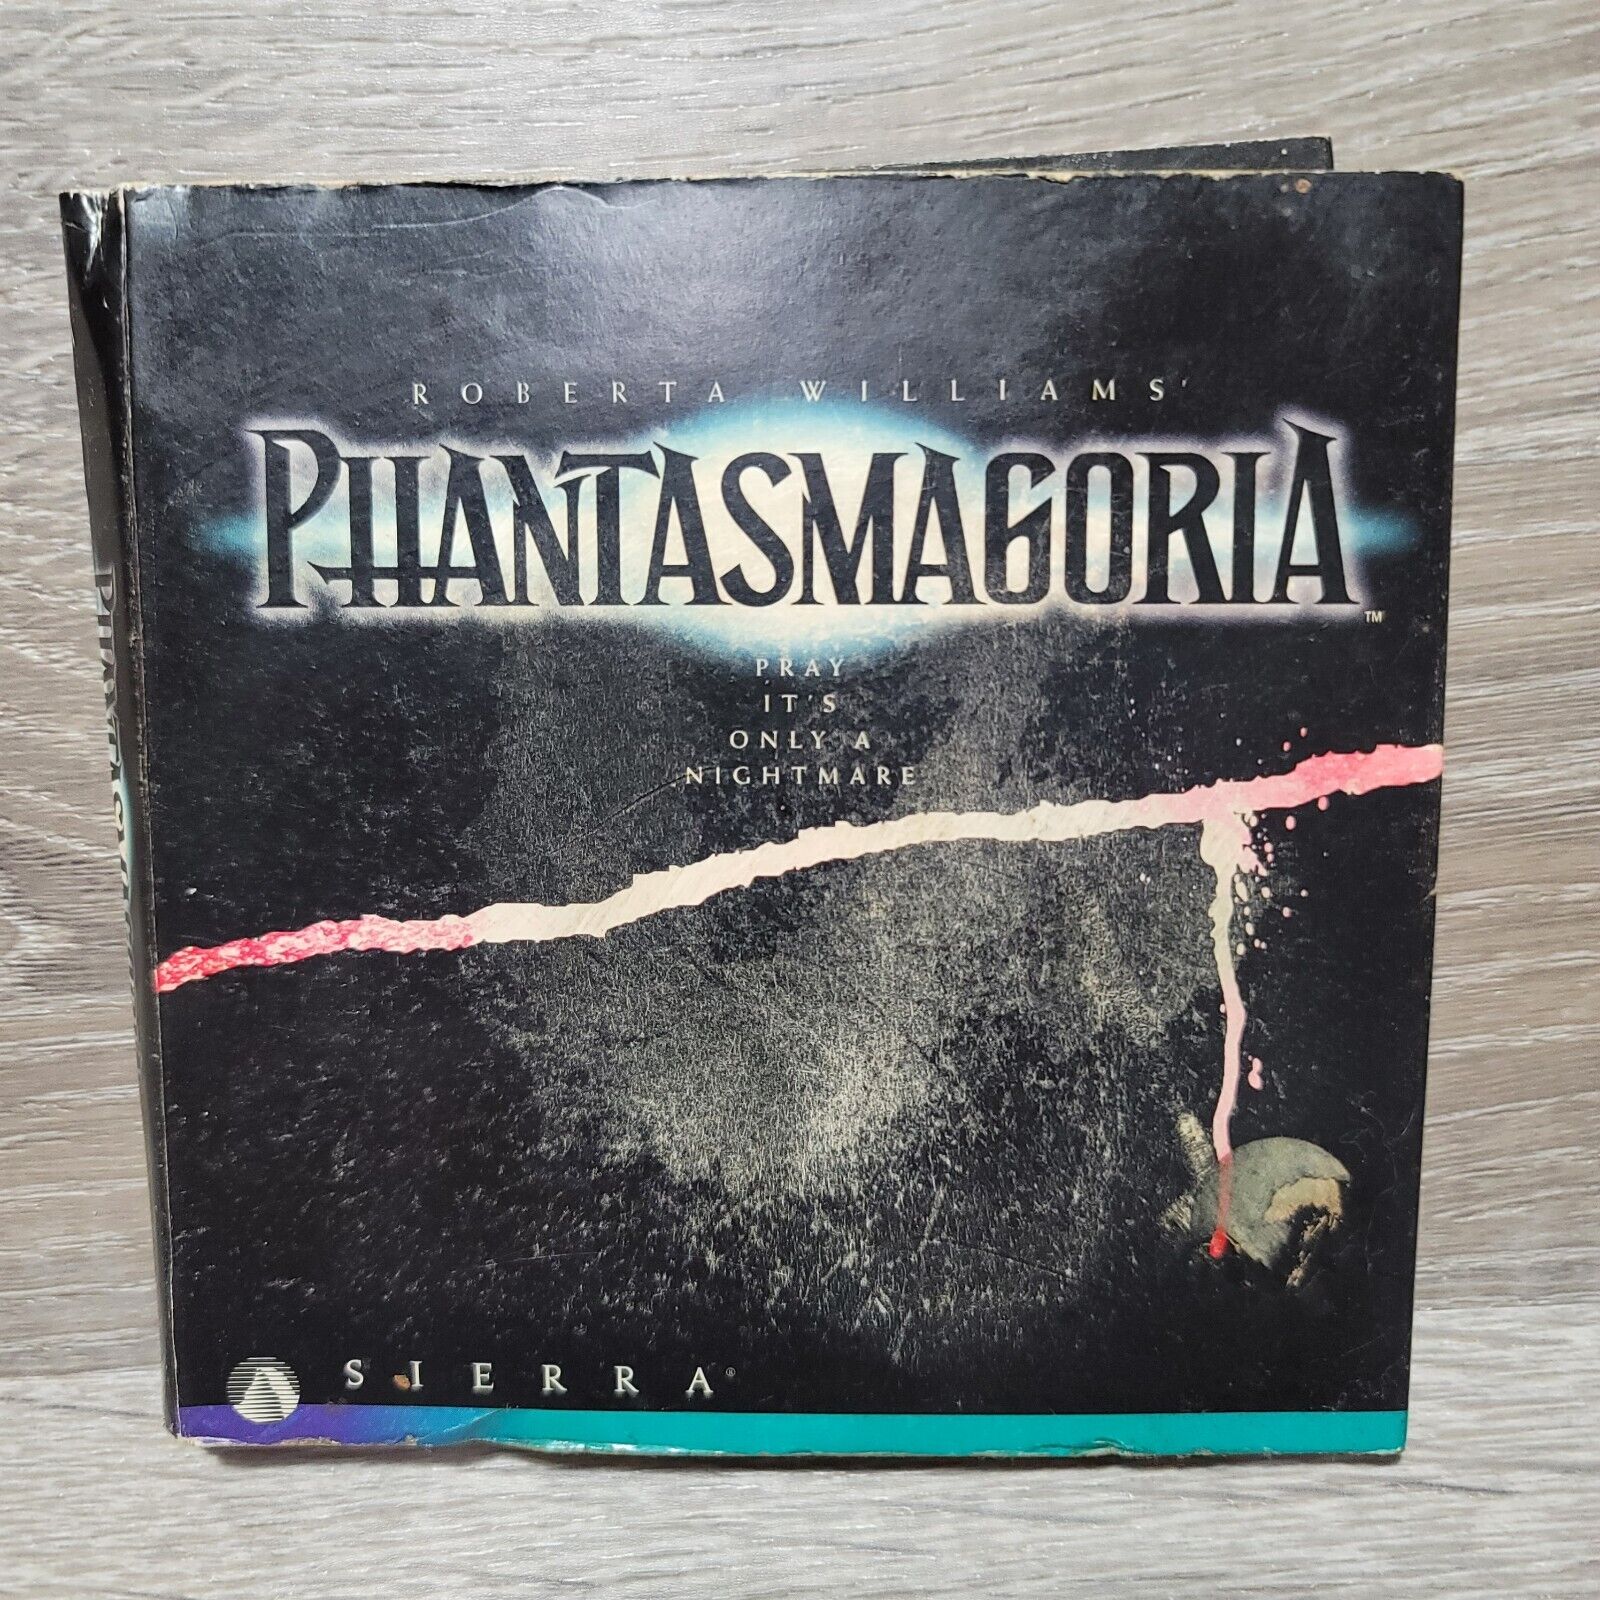 Vintage Phantasmagoria for PC Windows CD-ROM 7 Disc Set Sierra 1995 Horror Game